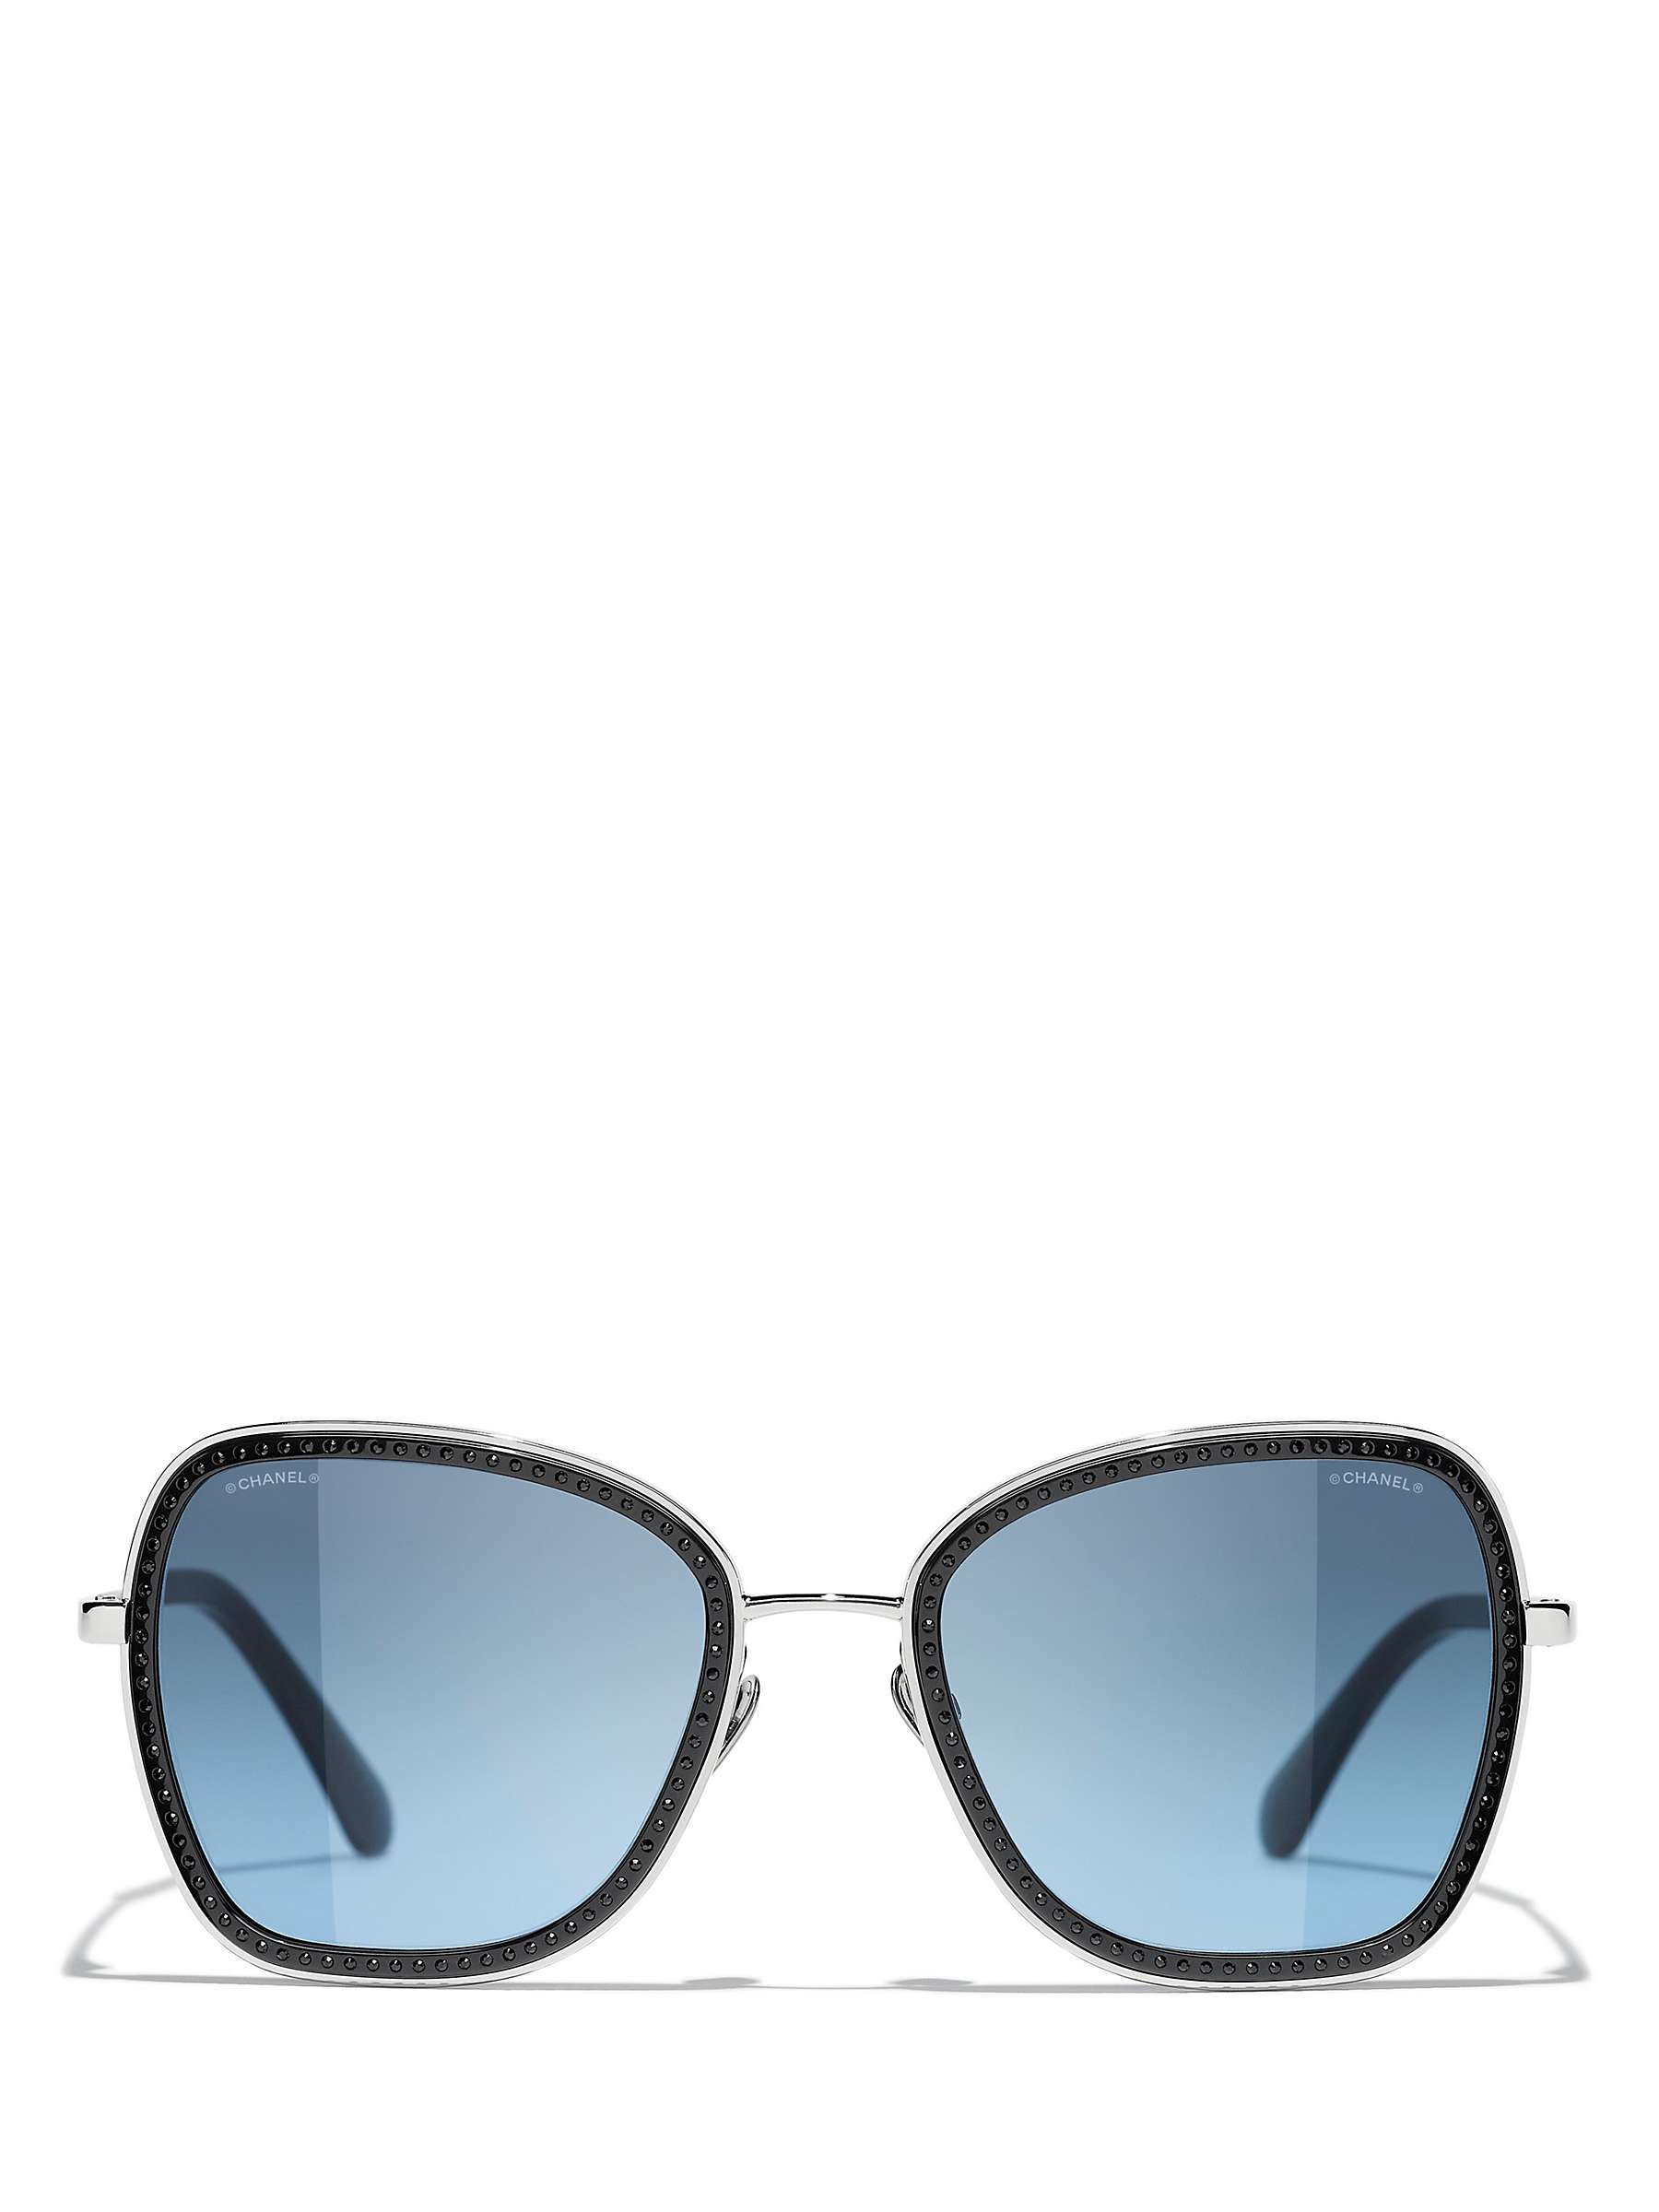 Buy CHANEL Irregular Sunglasses CH4277B Silver/Blue Gradient Online at johnlewis.com